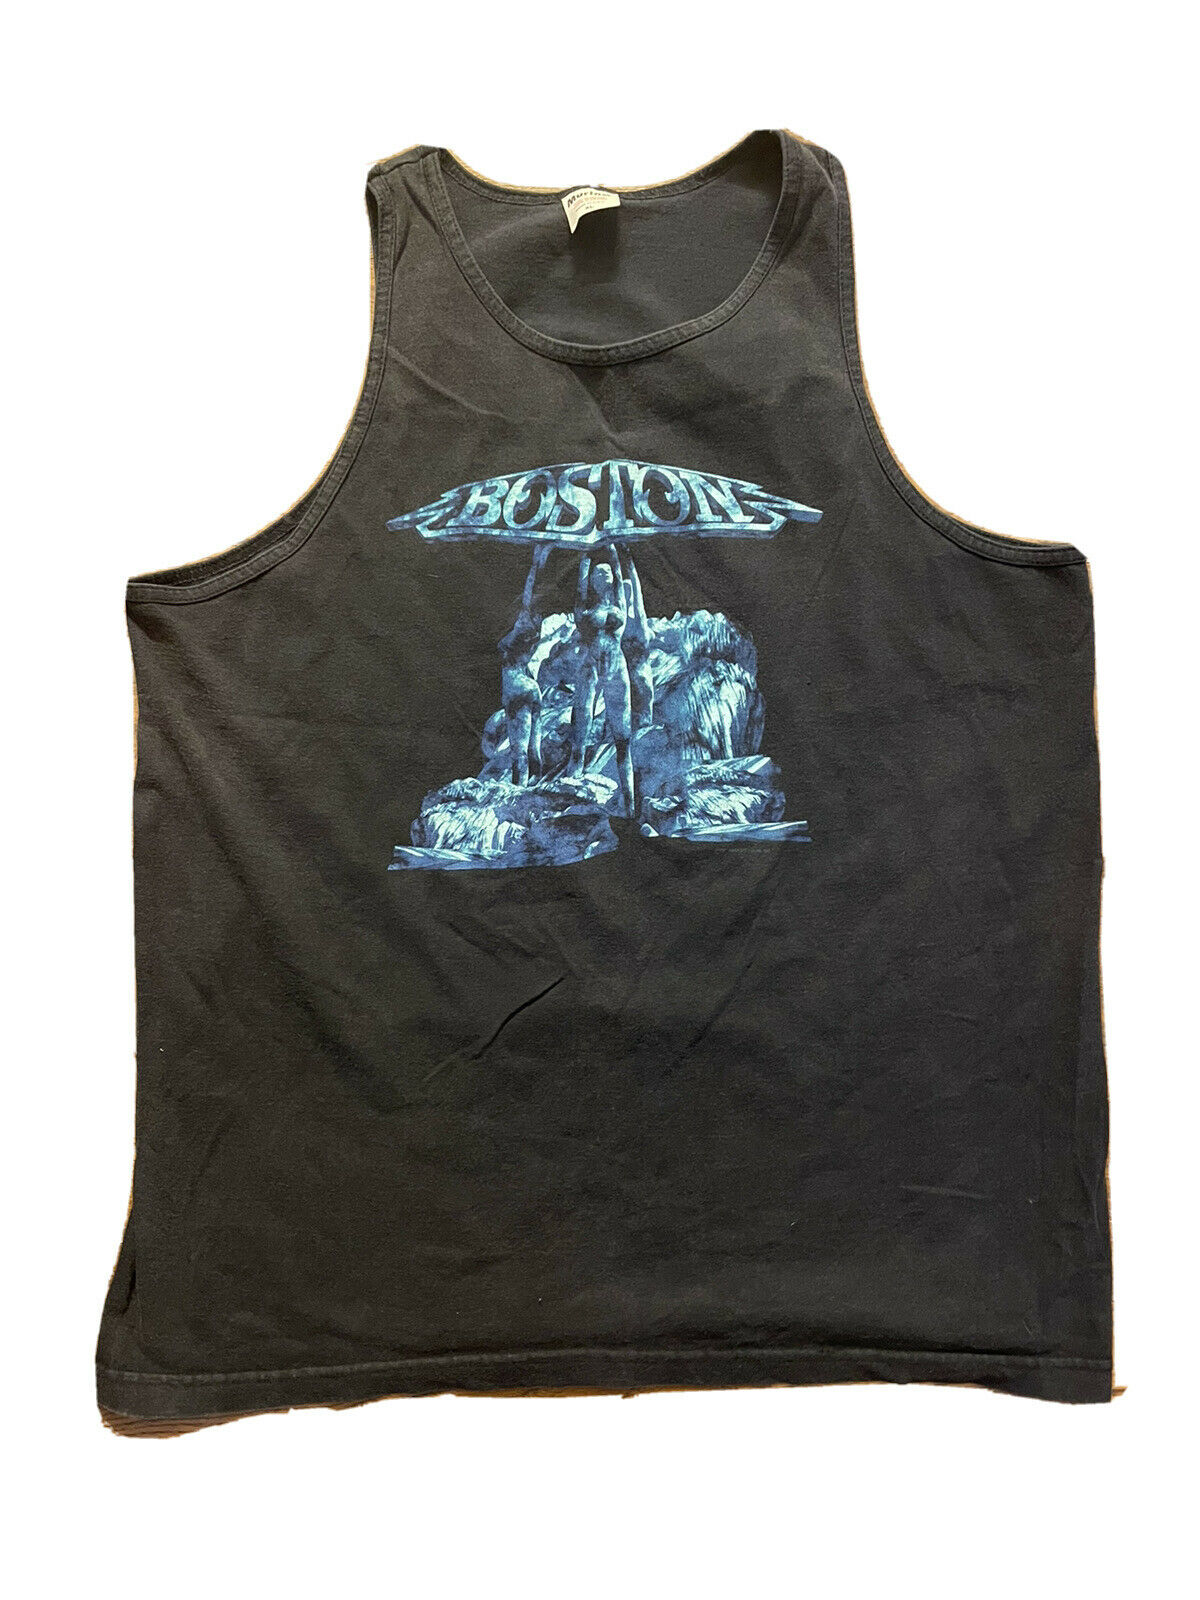 Vintage 1997 Boston "walk On" Crew Concert Tour (xl) Tank Top Shirt